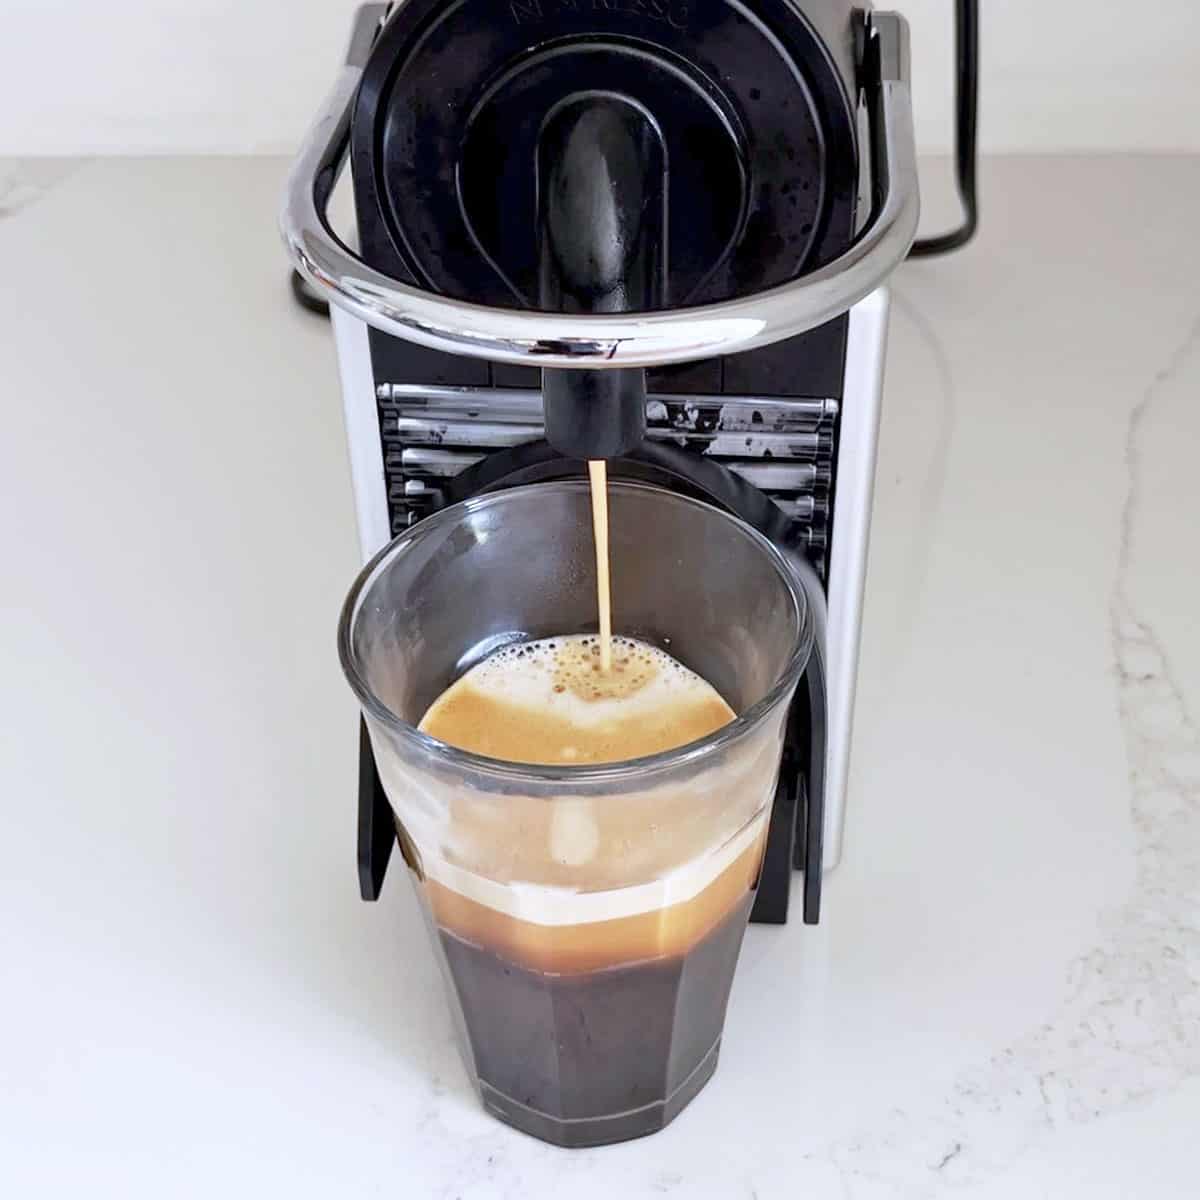 Using a Nespresso machine to make coffee.